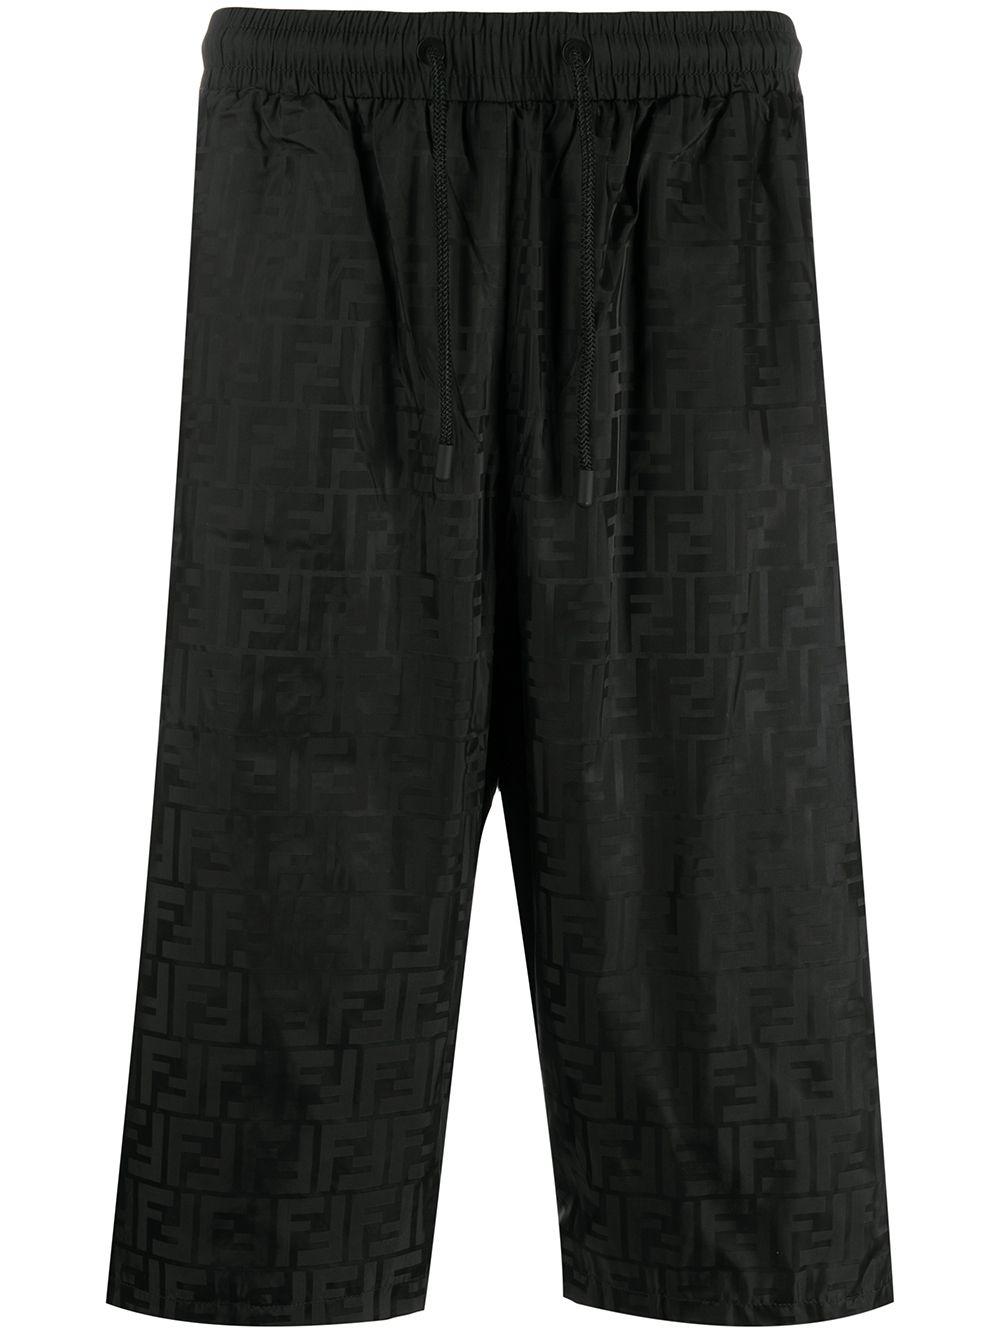 Fendi Cotton Striped Ff Bermuda Shorts in Black for Men - Lyst